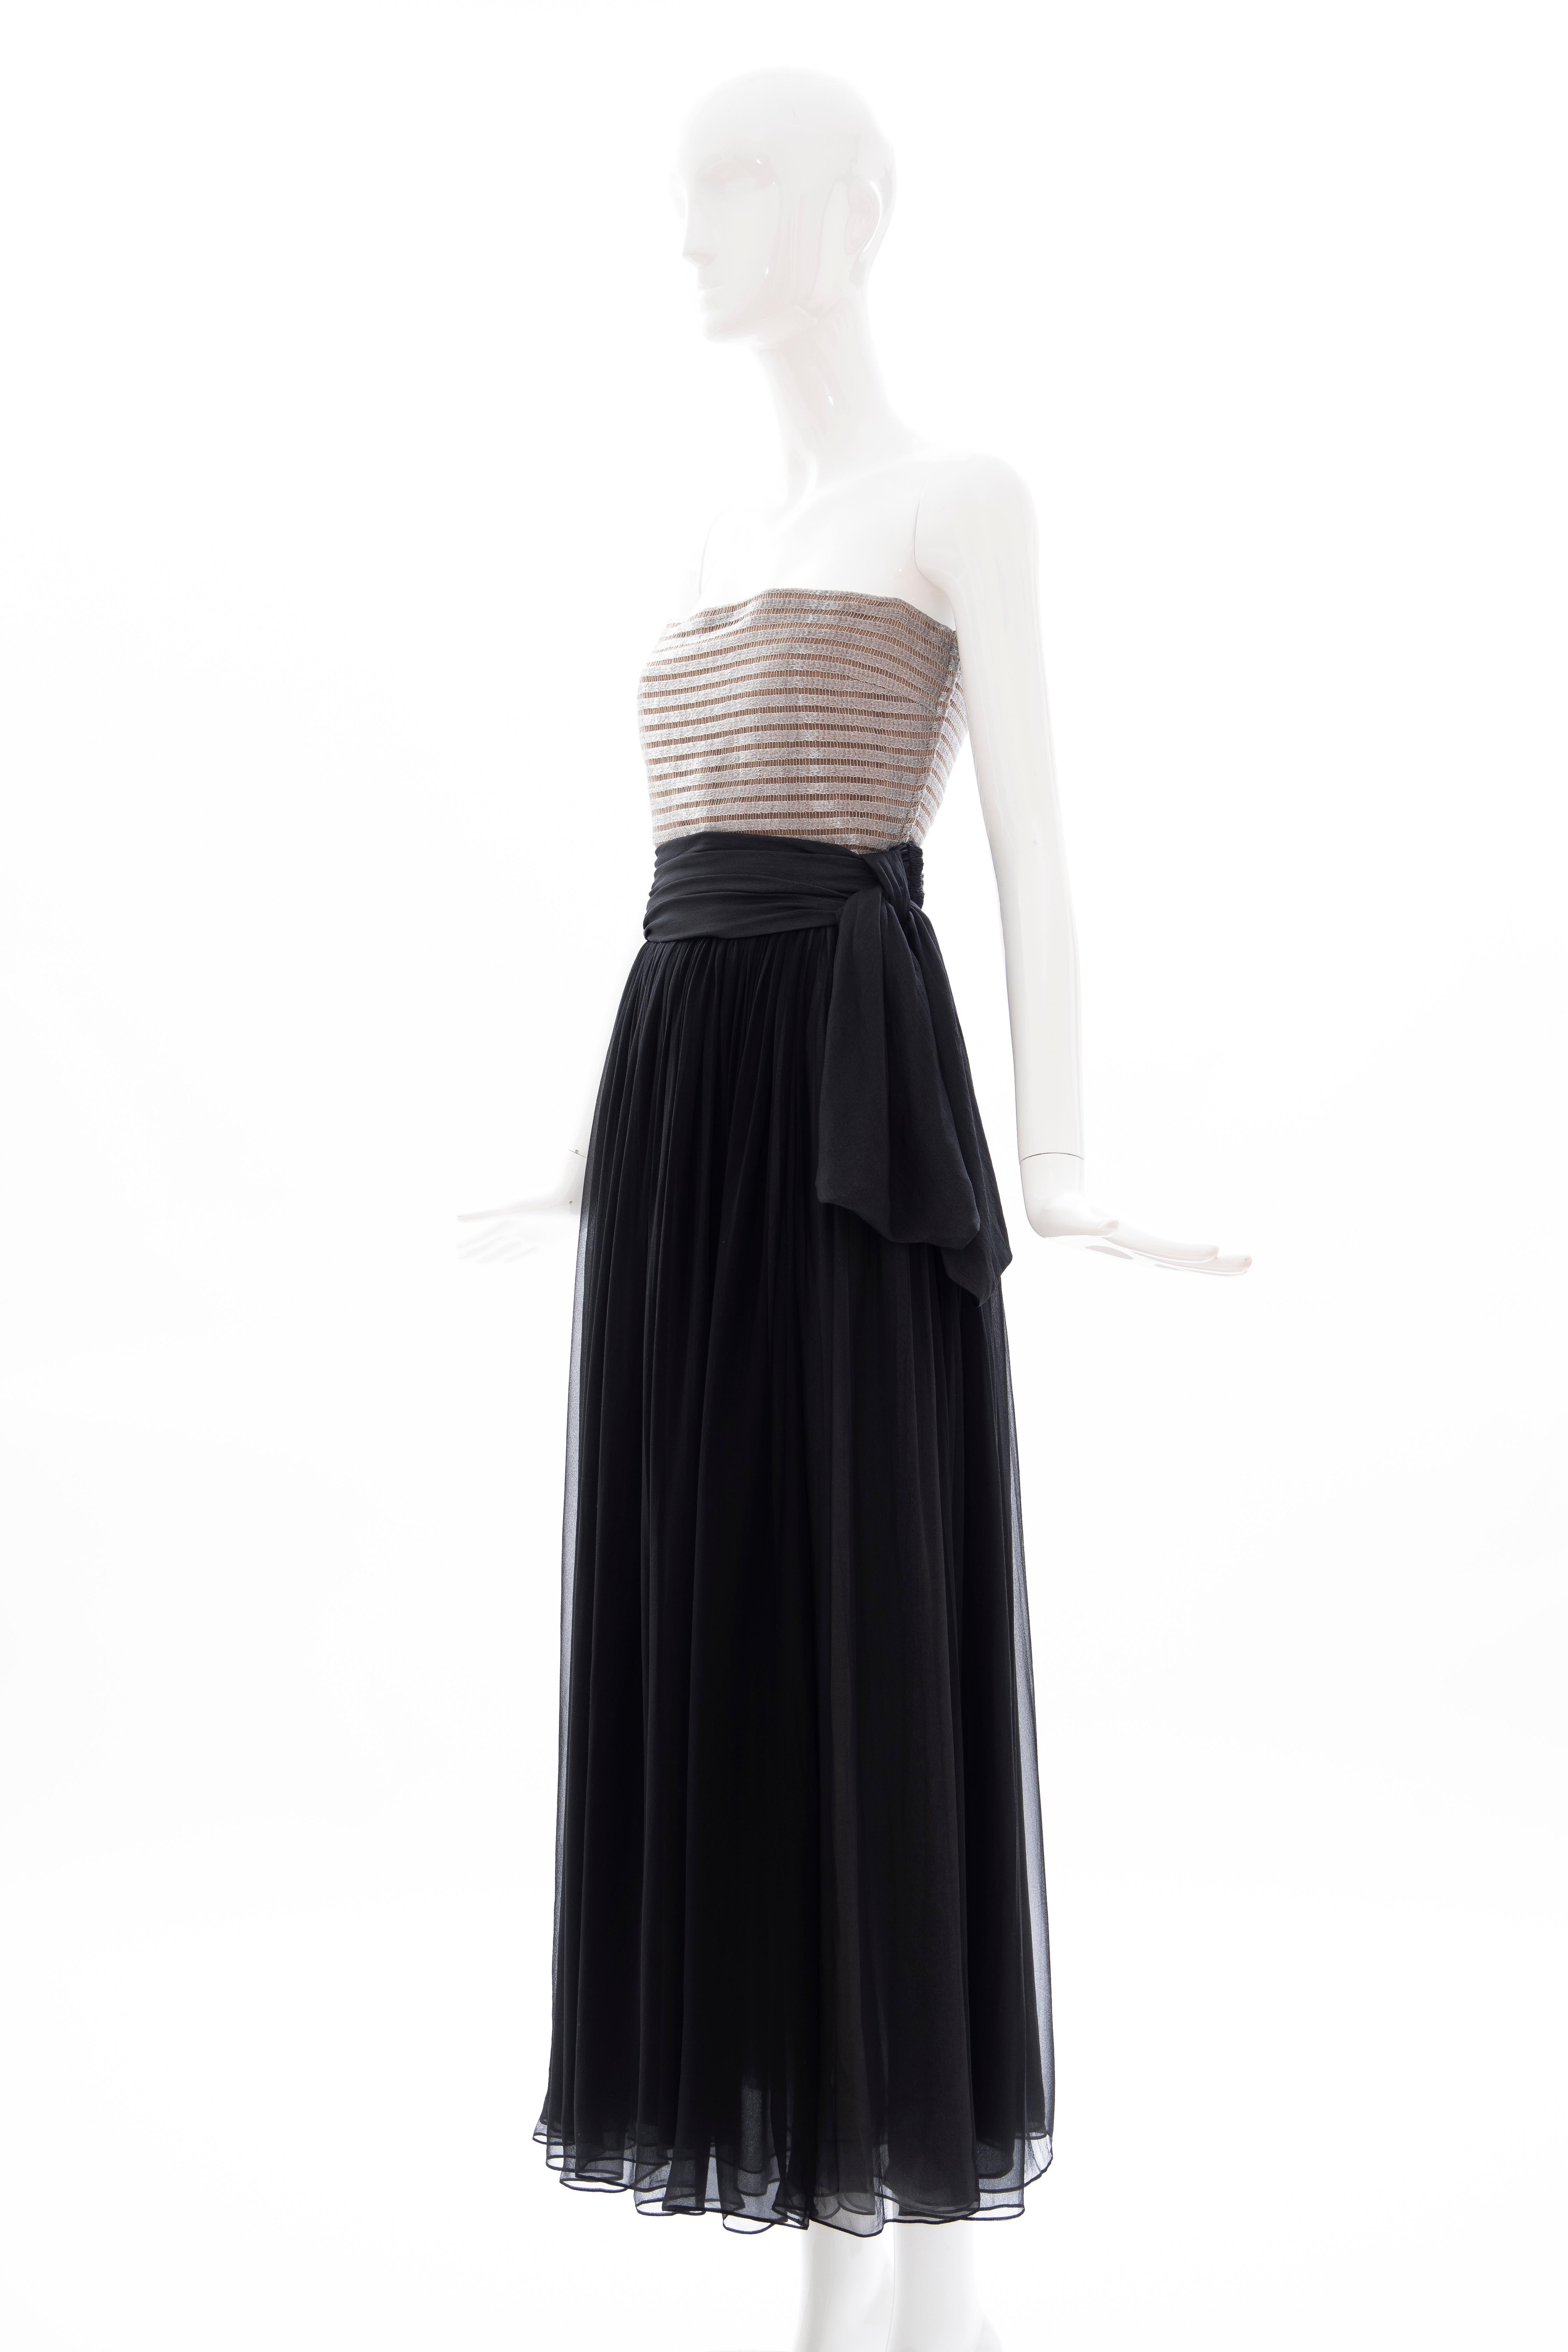 Calvin Klein Collection Runway Strapless Silk Chiffon Evening Dress, Spring 1989 For Sale 2